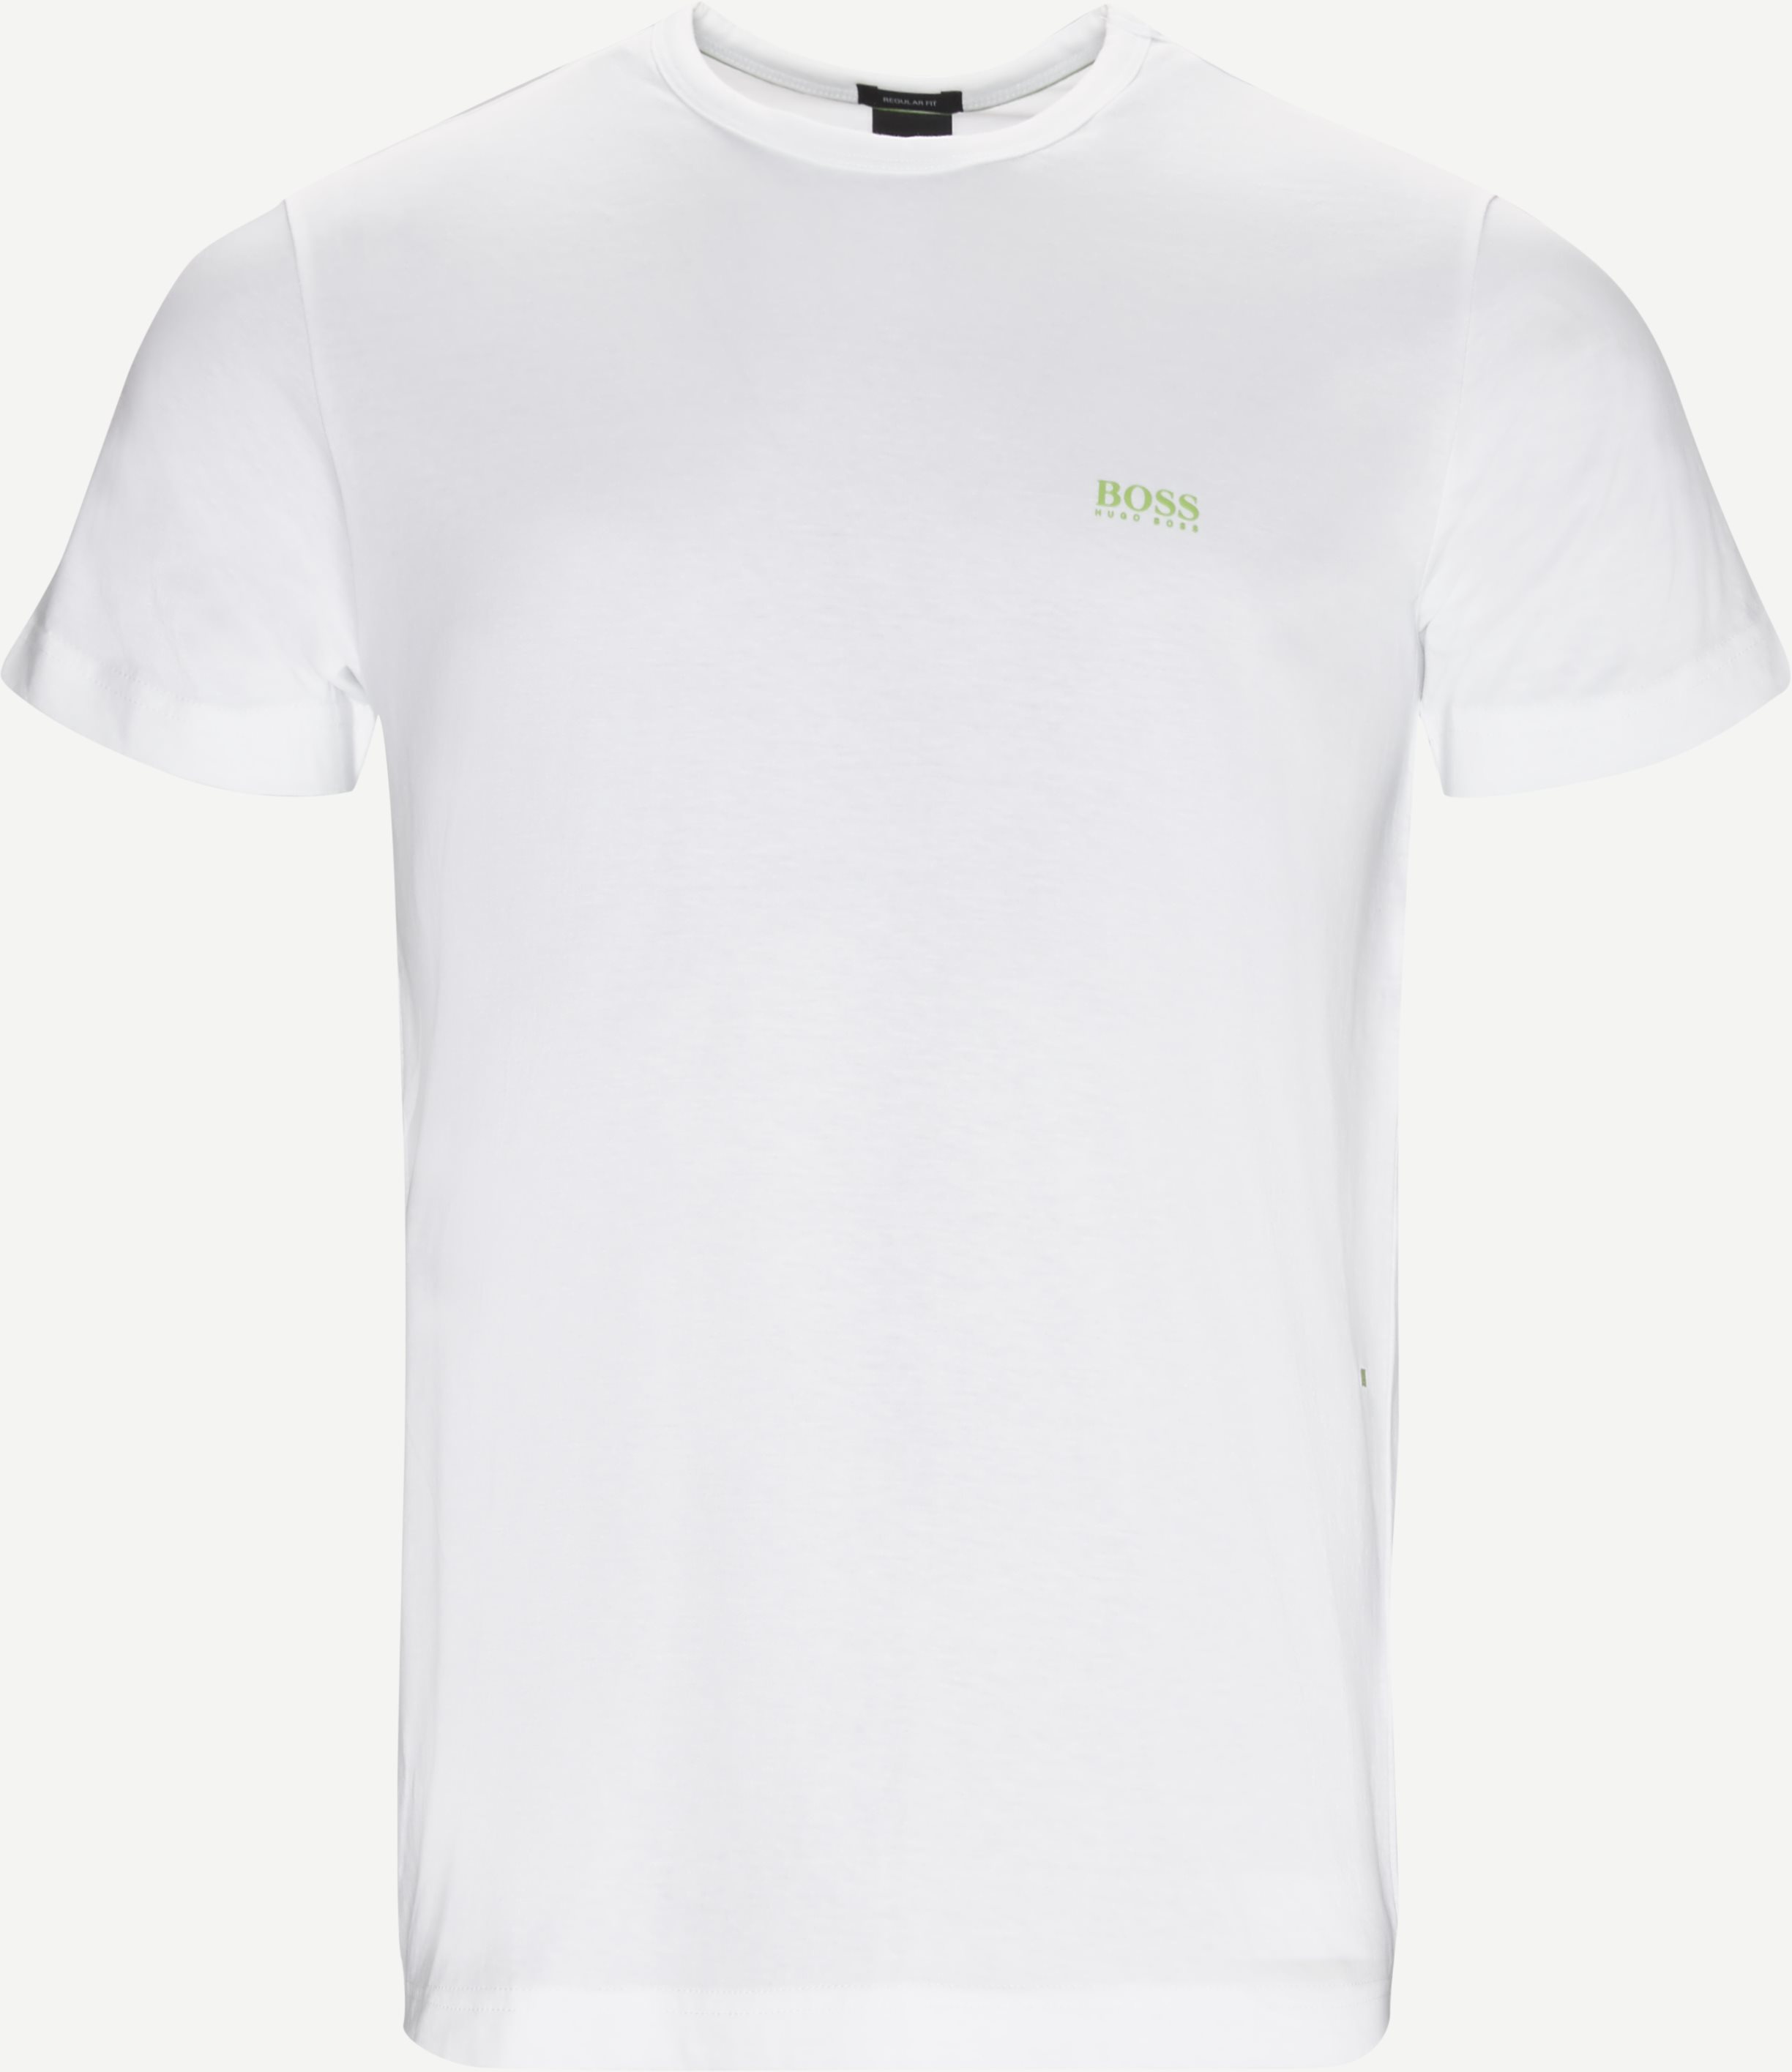 Tee T-shirt - T-shirts - Regular fit - Hvid